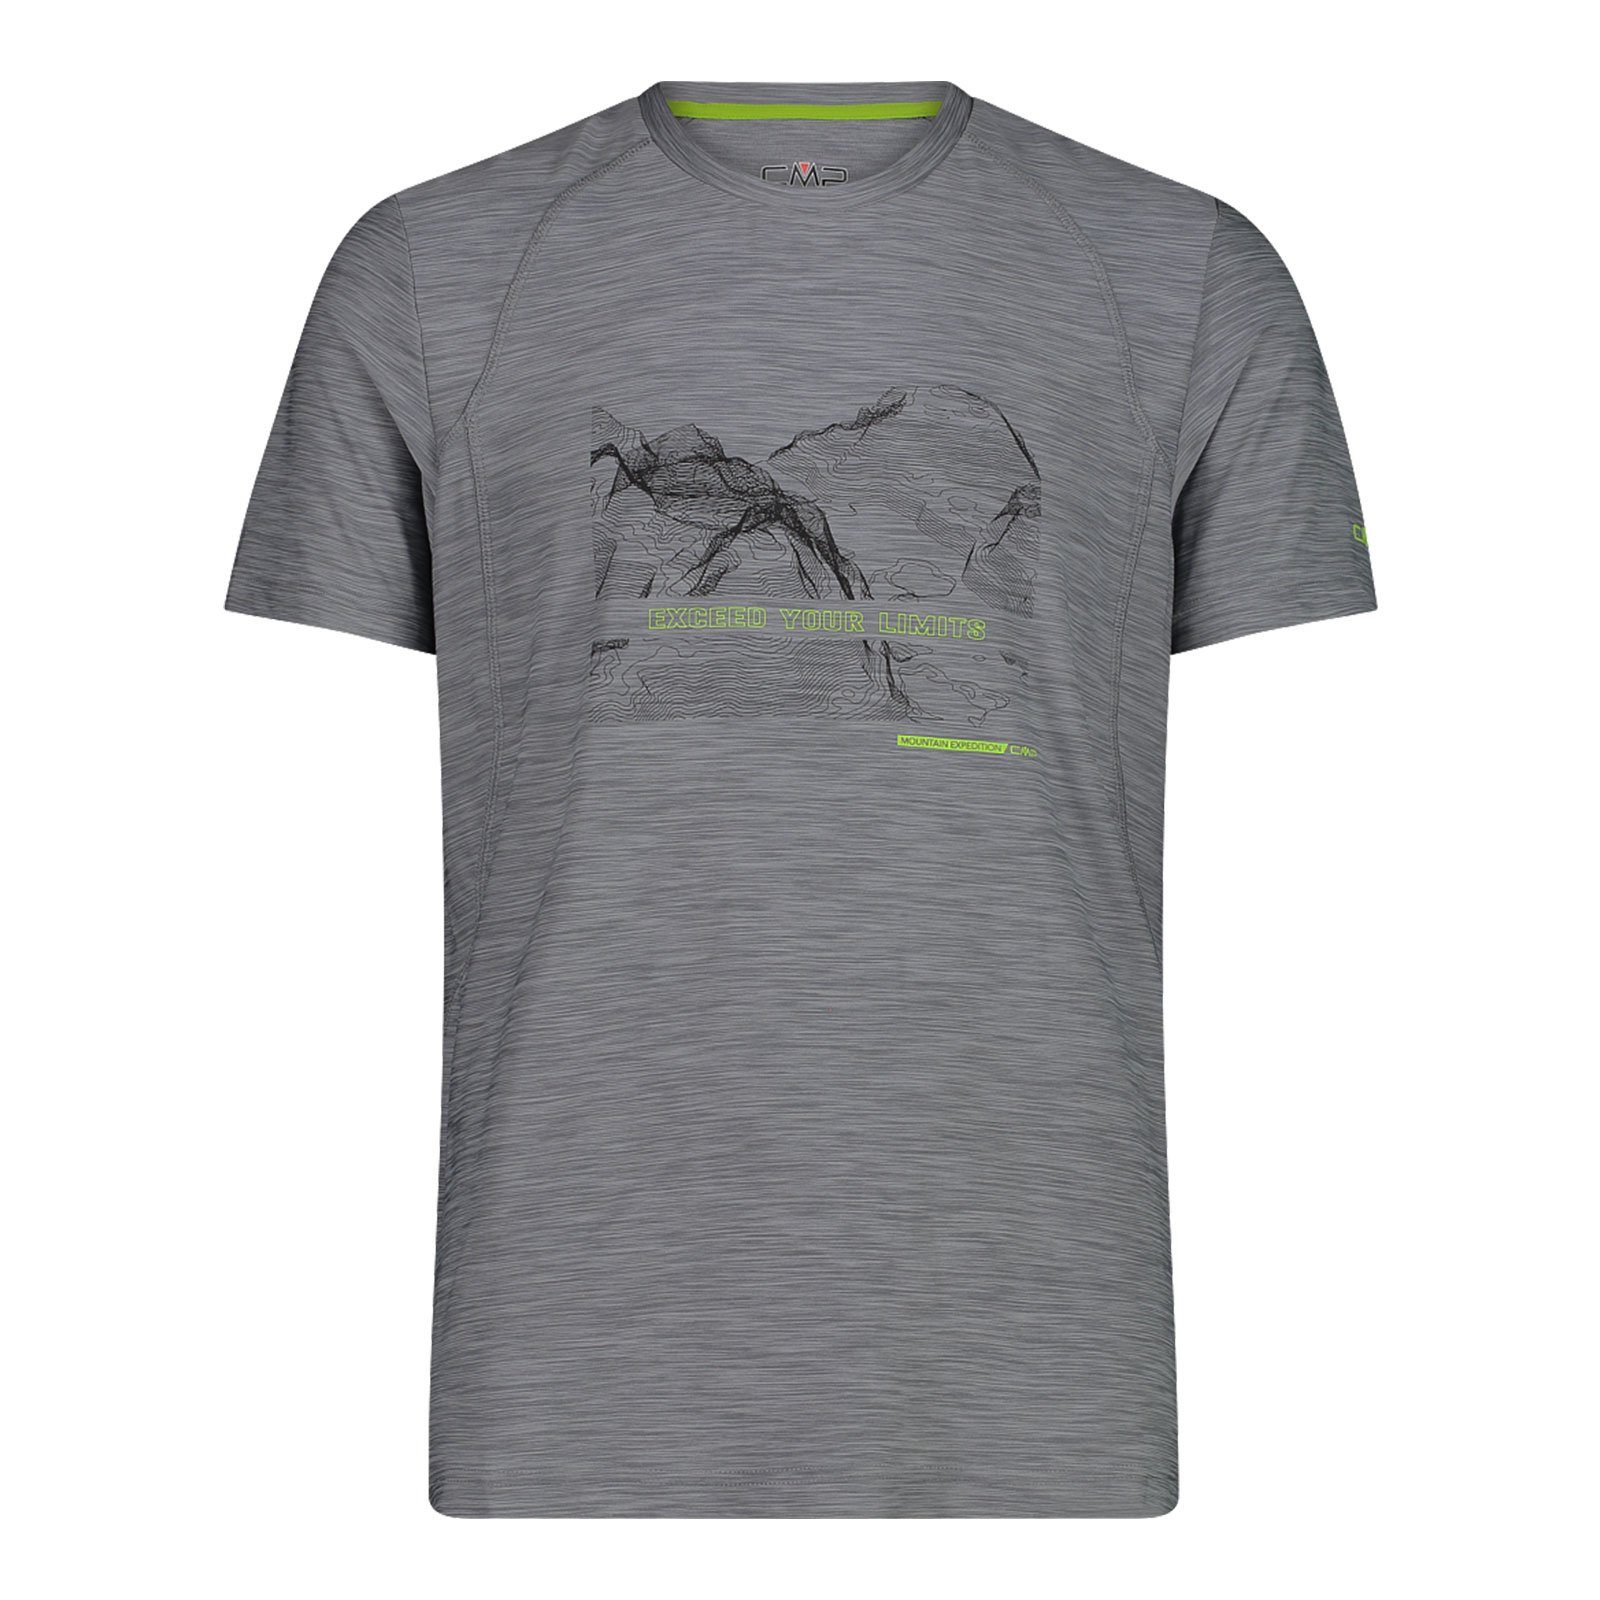 Dry-Function-Technologie grey T-Shirt limegreen CMP mel. / Funktionsshirt 02TN mit Man